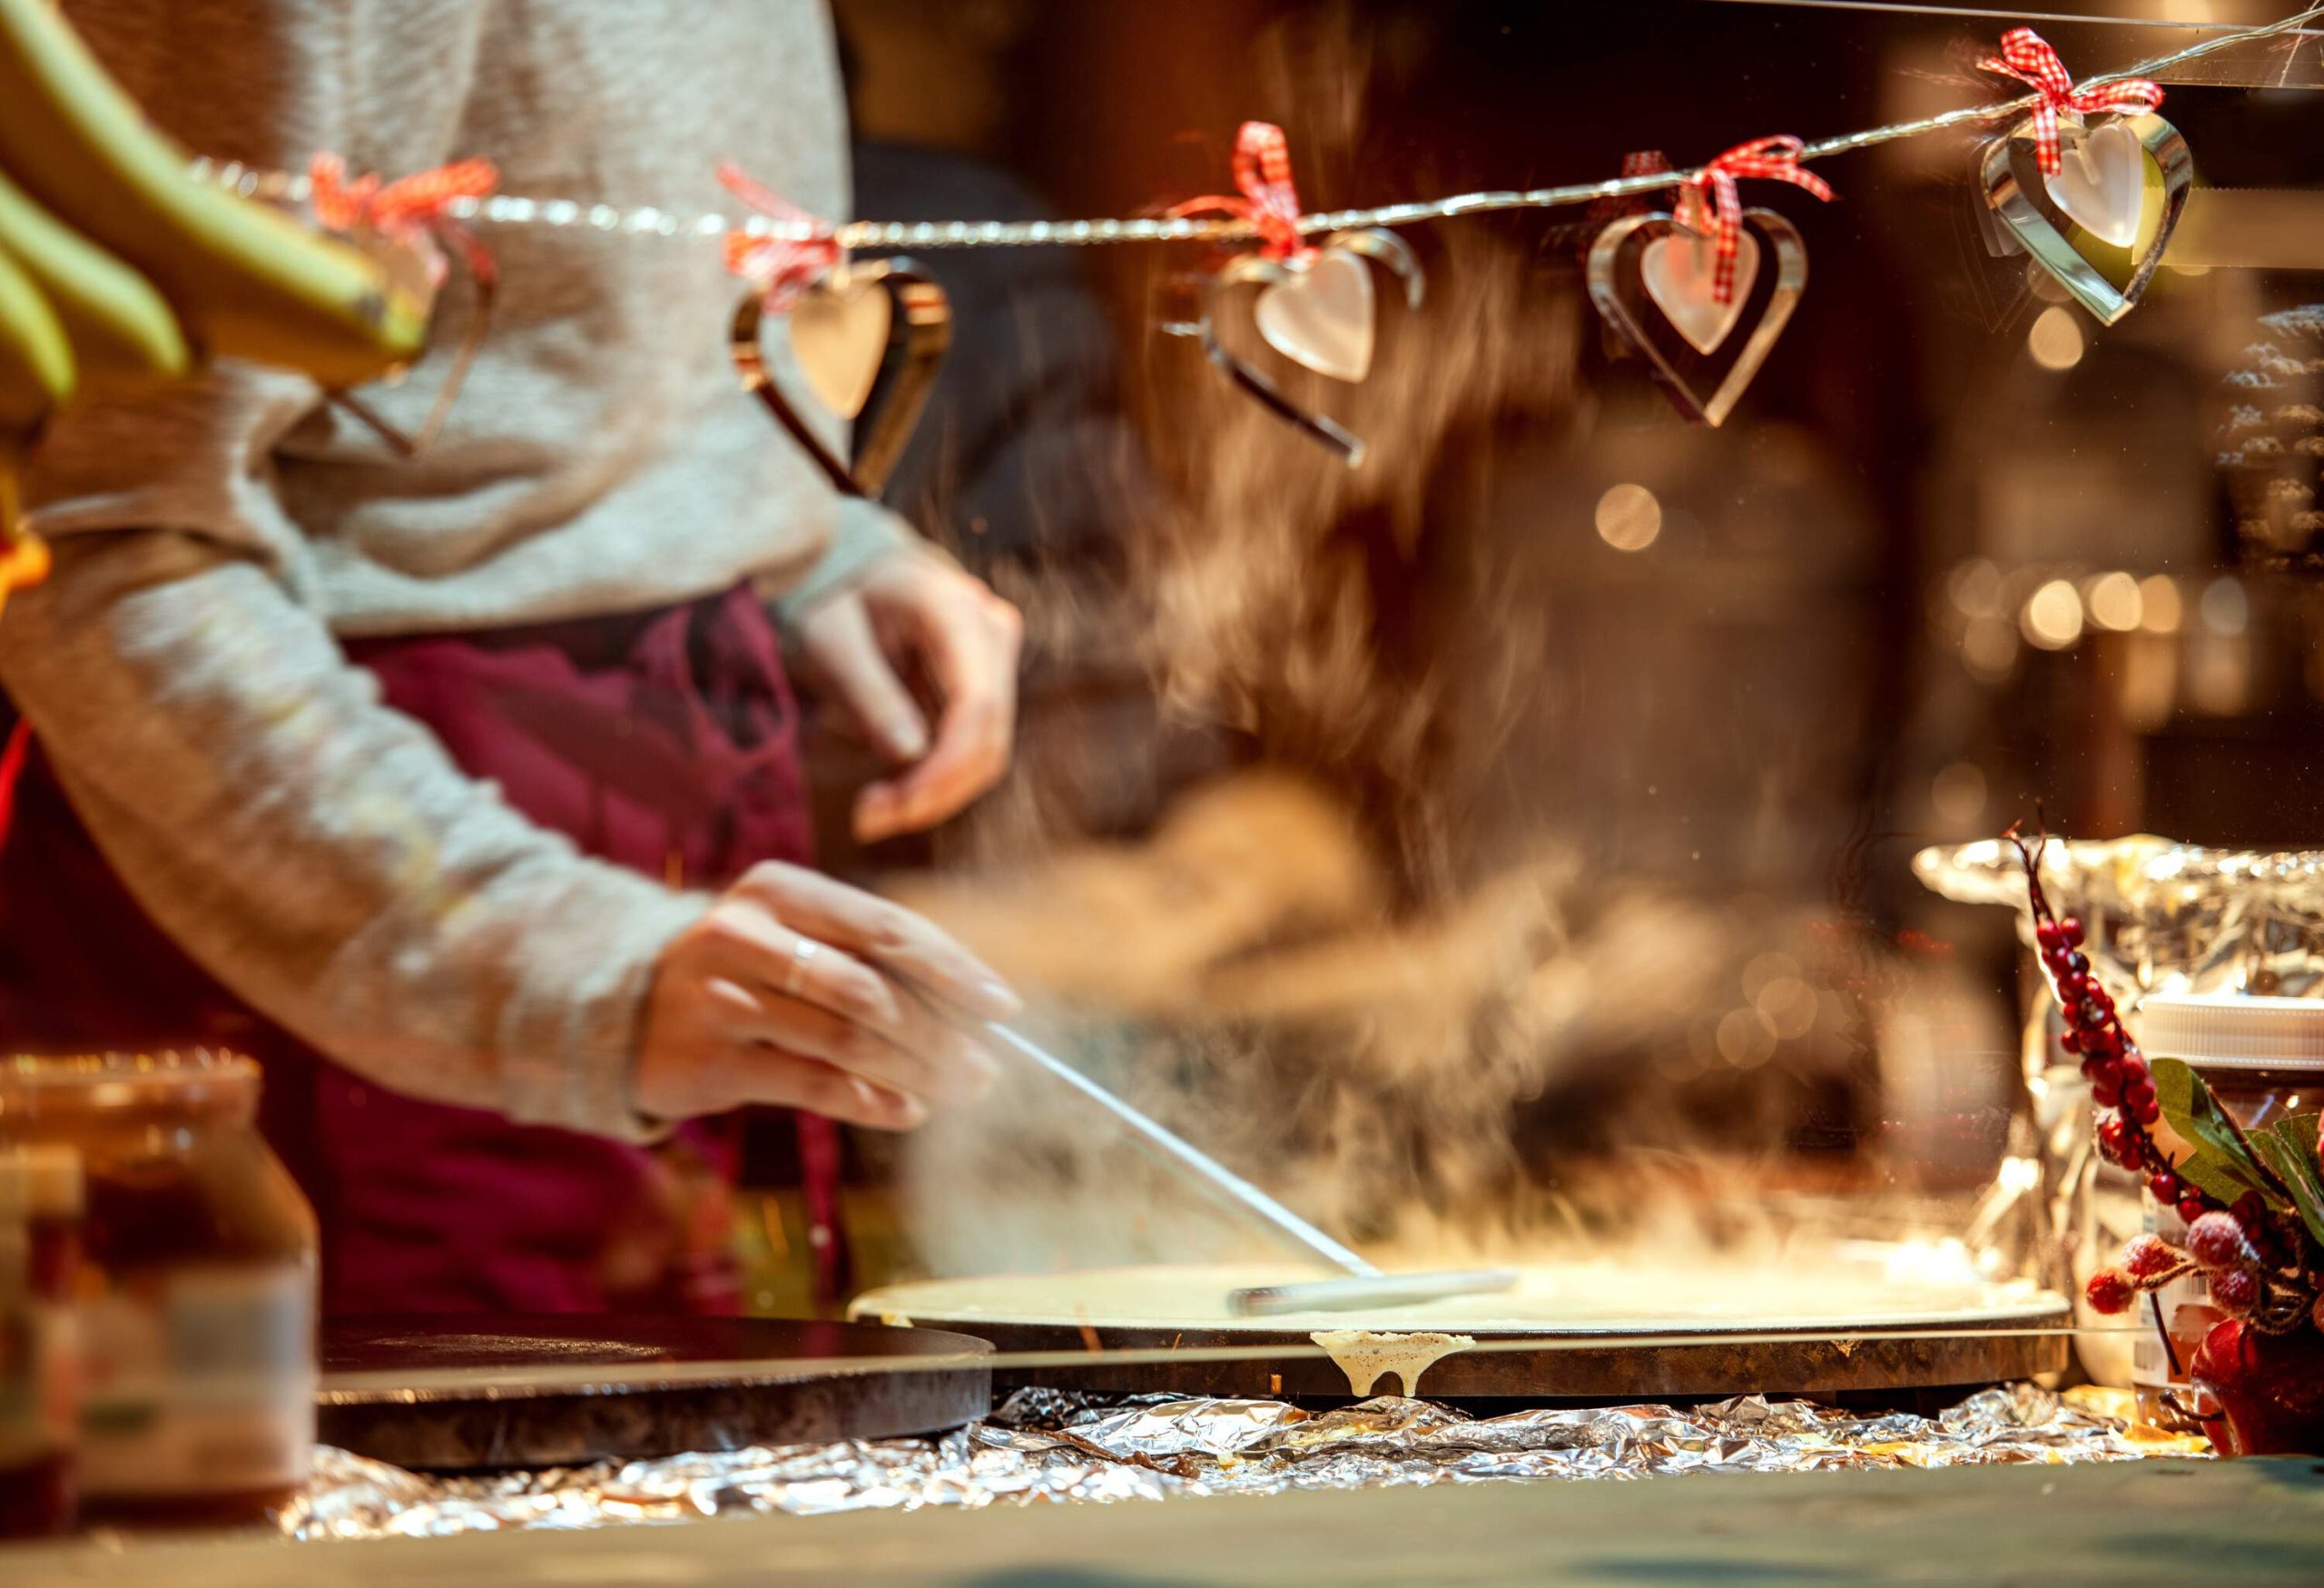 Market vendor making crepes at Christmas Market